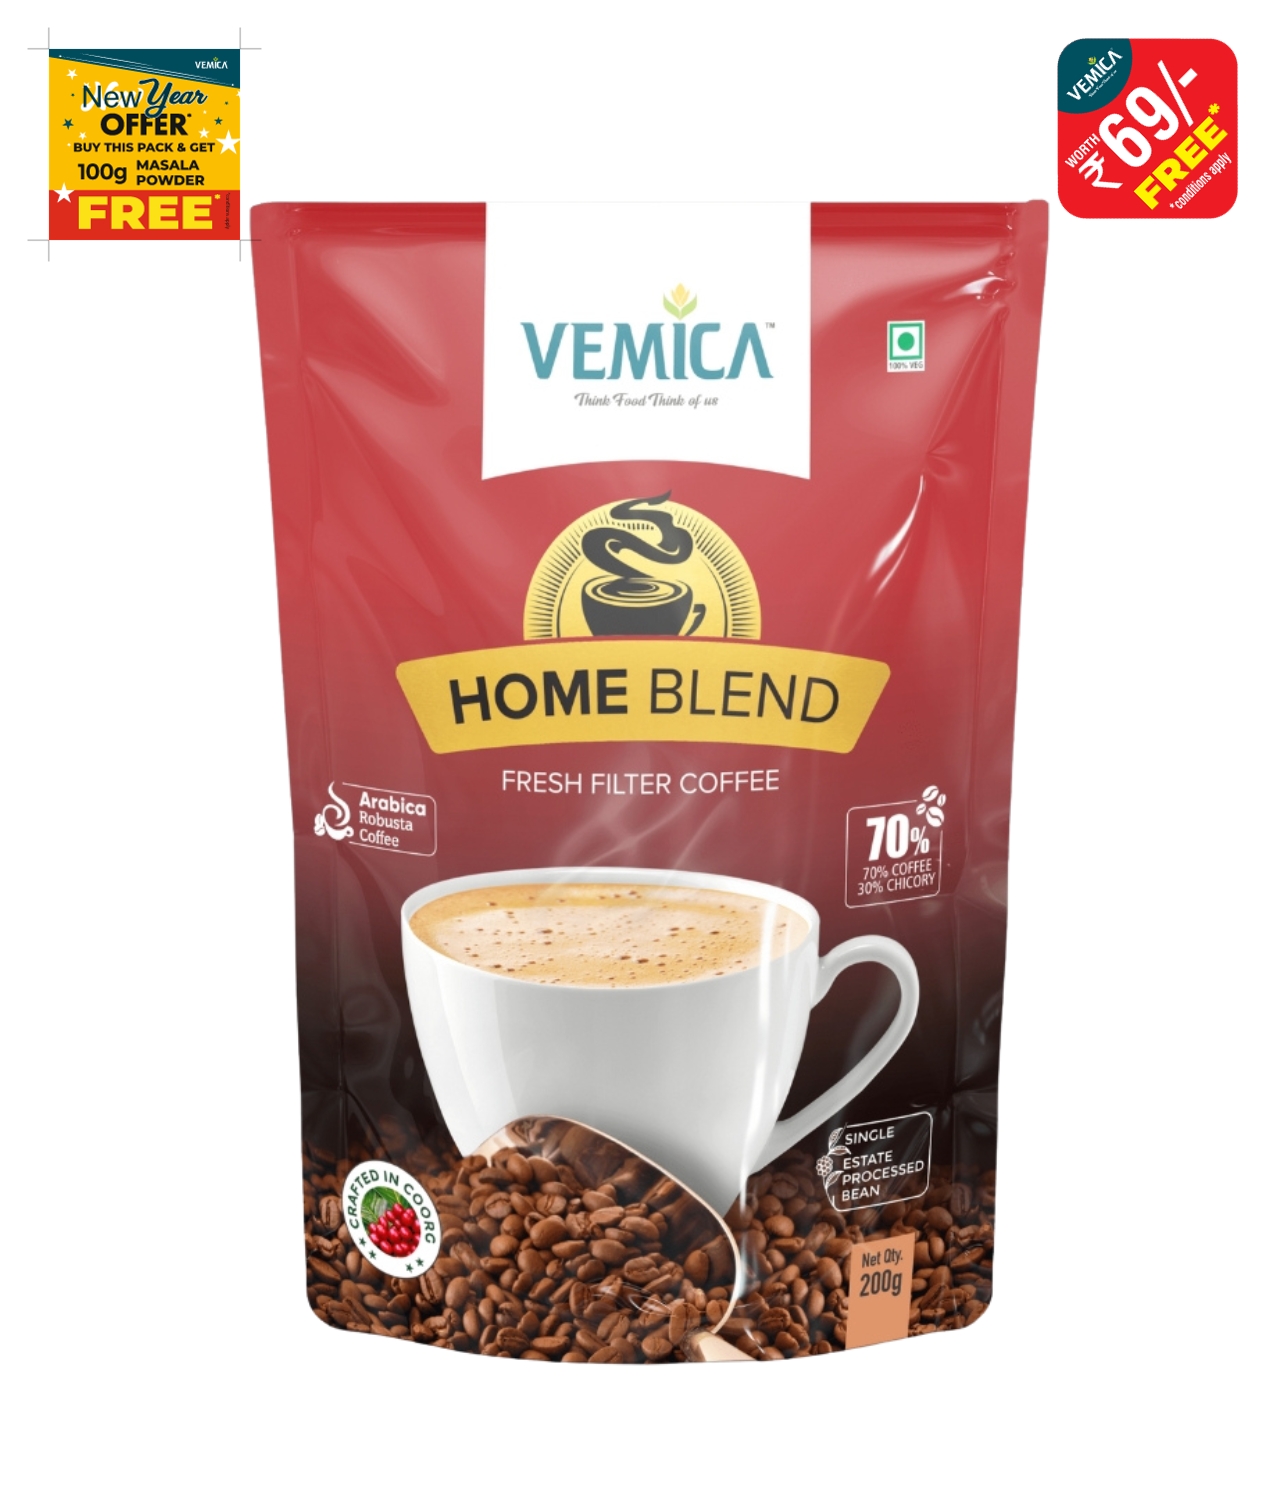 Home Blend Coffee